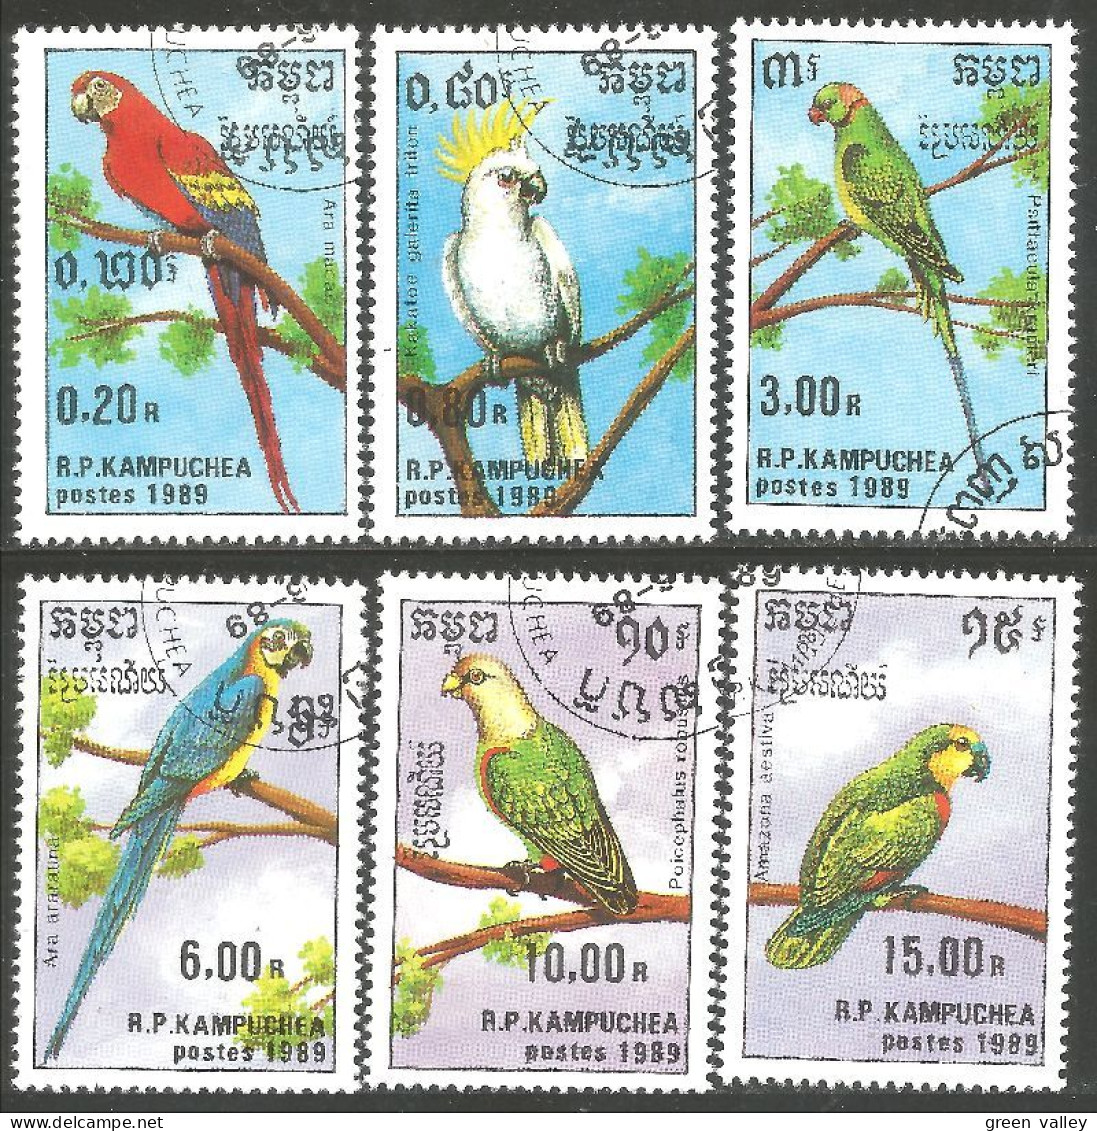 OI-72a Cambodge Perroquets Parrots Papagaios Loros Papagei Papagallo - Altri & Non Classificati